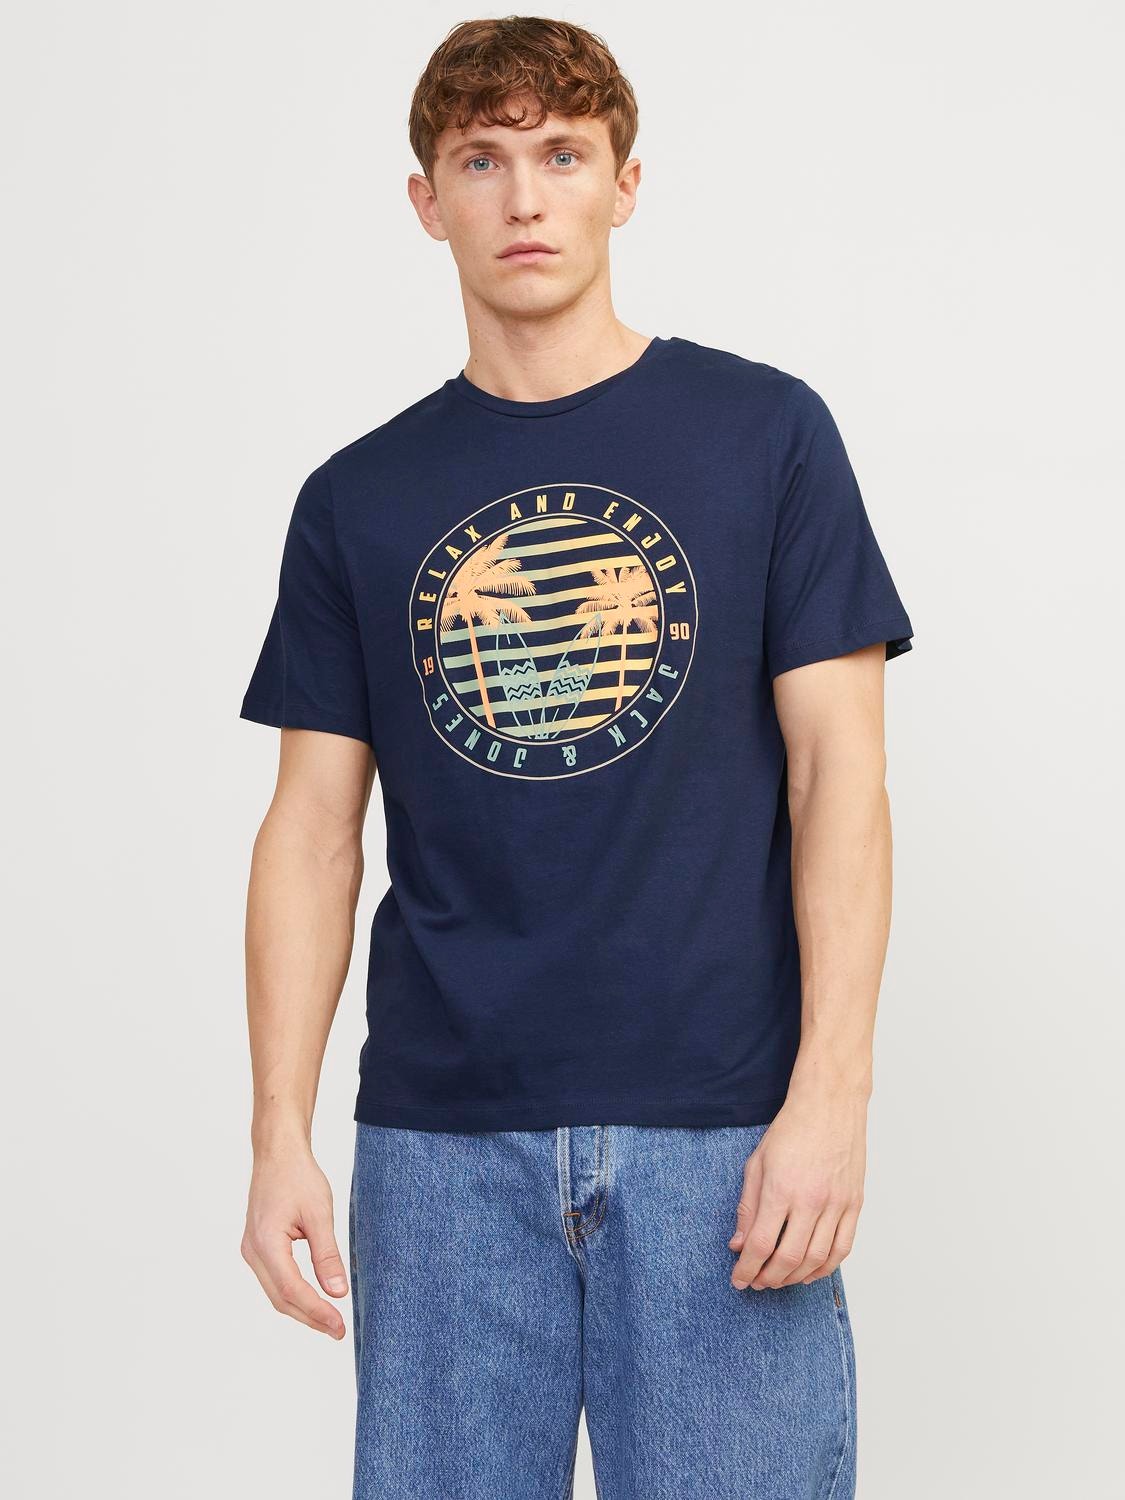 Jack & Jones Printed Crew neck T-shirt -Navy Blazer - 12249266